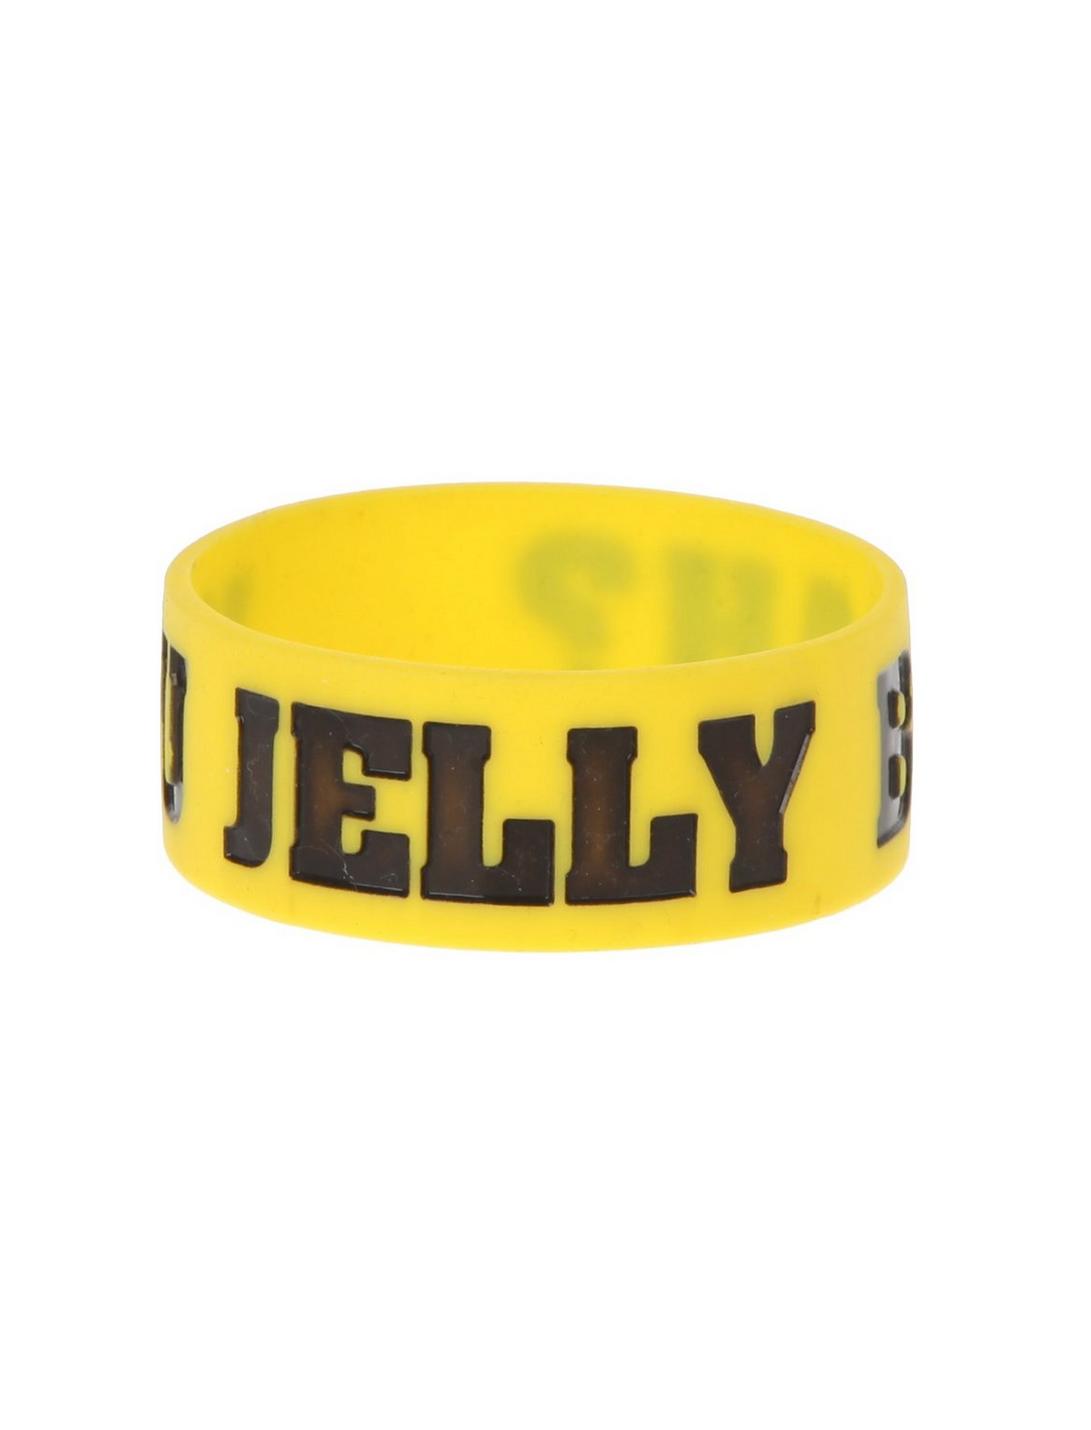 Yellow Y U Jelly Brah? Rubber Bracelet, , hi-res